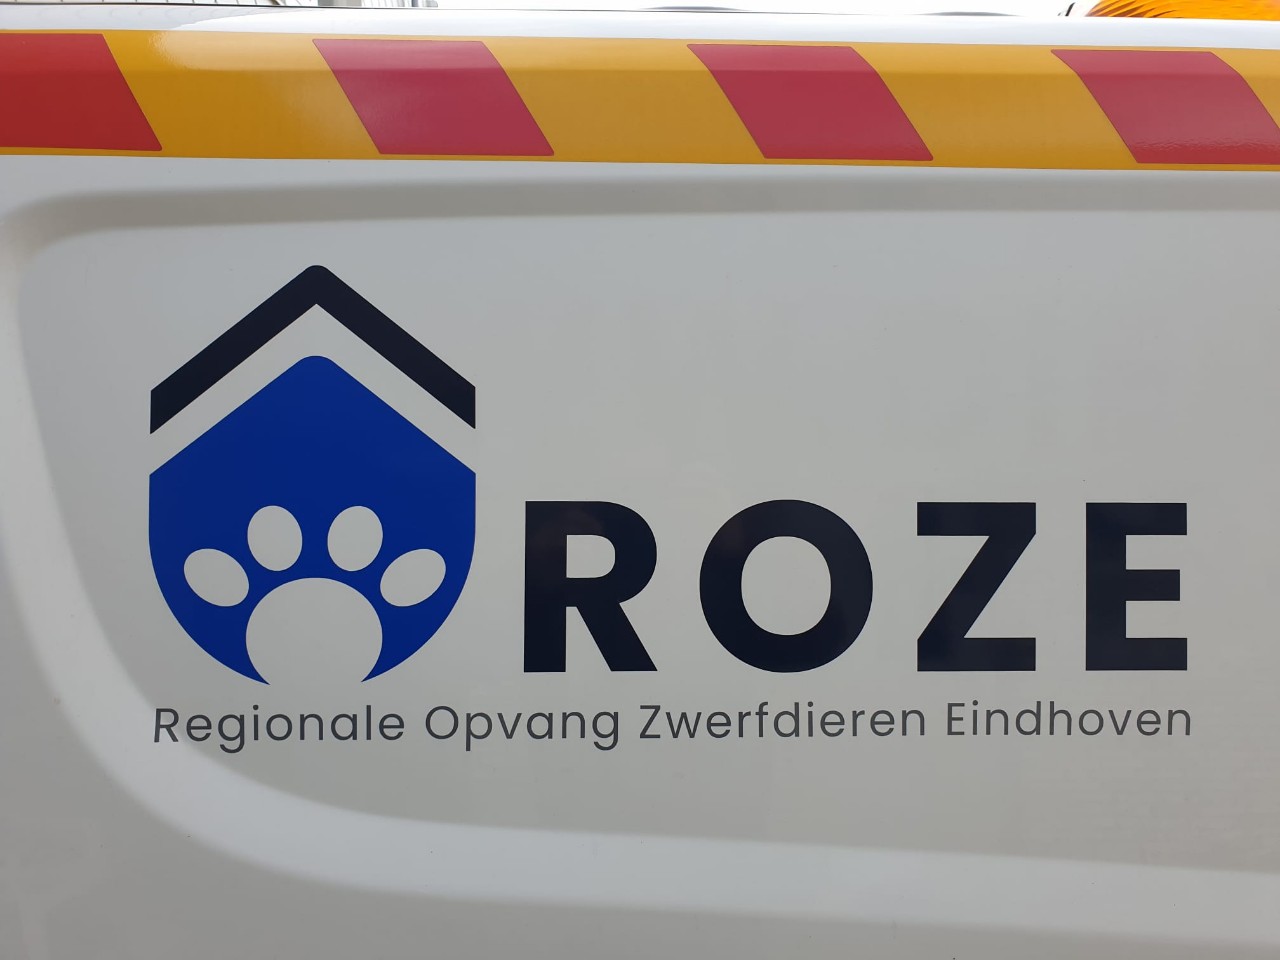 Regionale opvang zwerfdieren Eindhoven #253 (21)